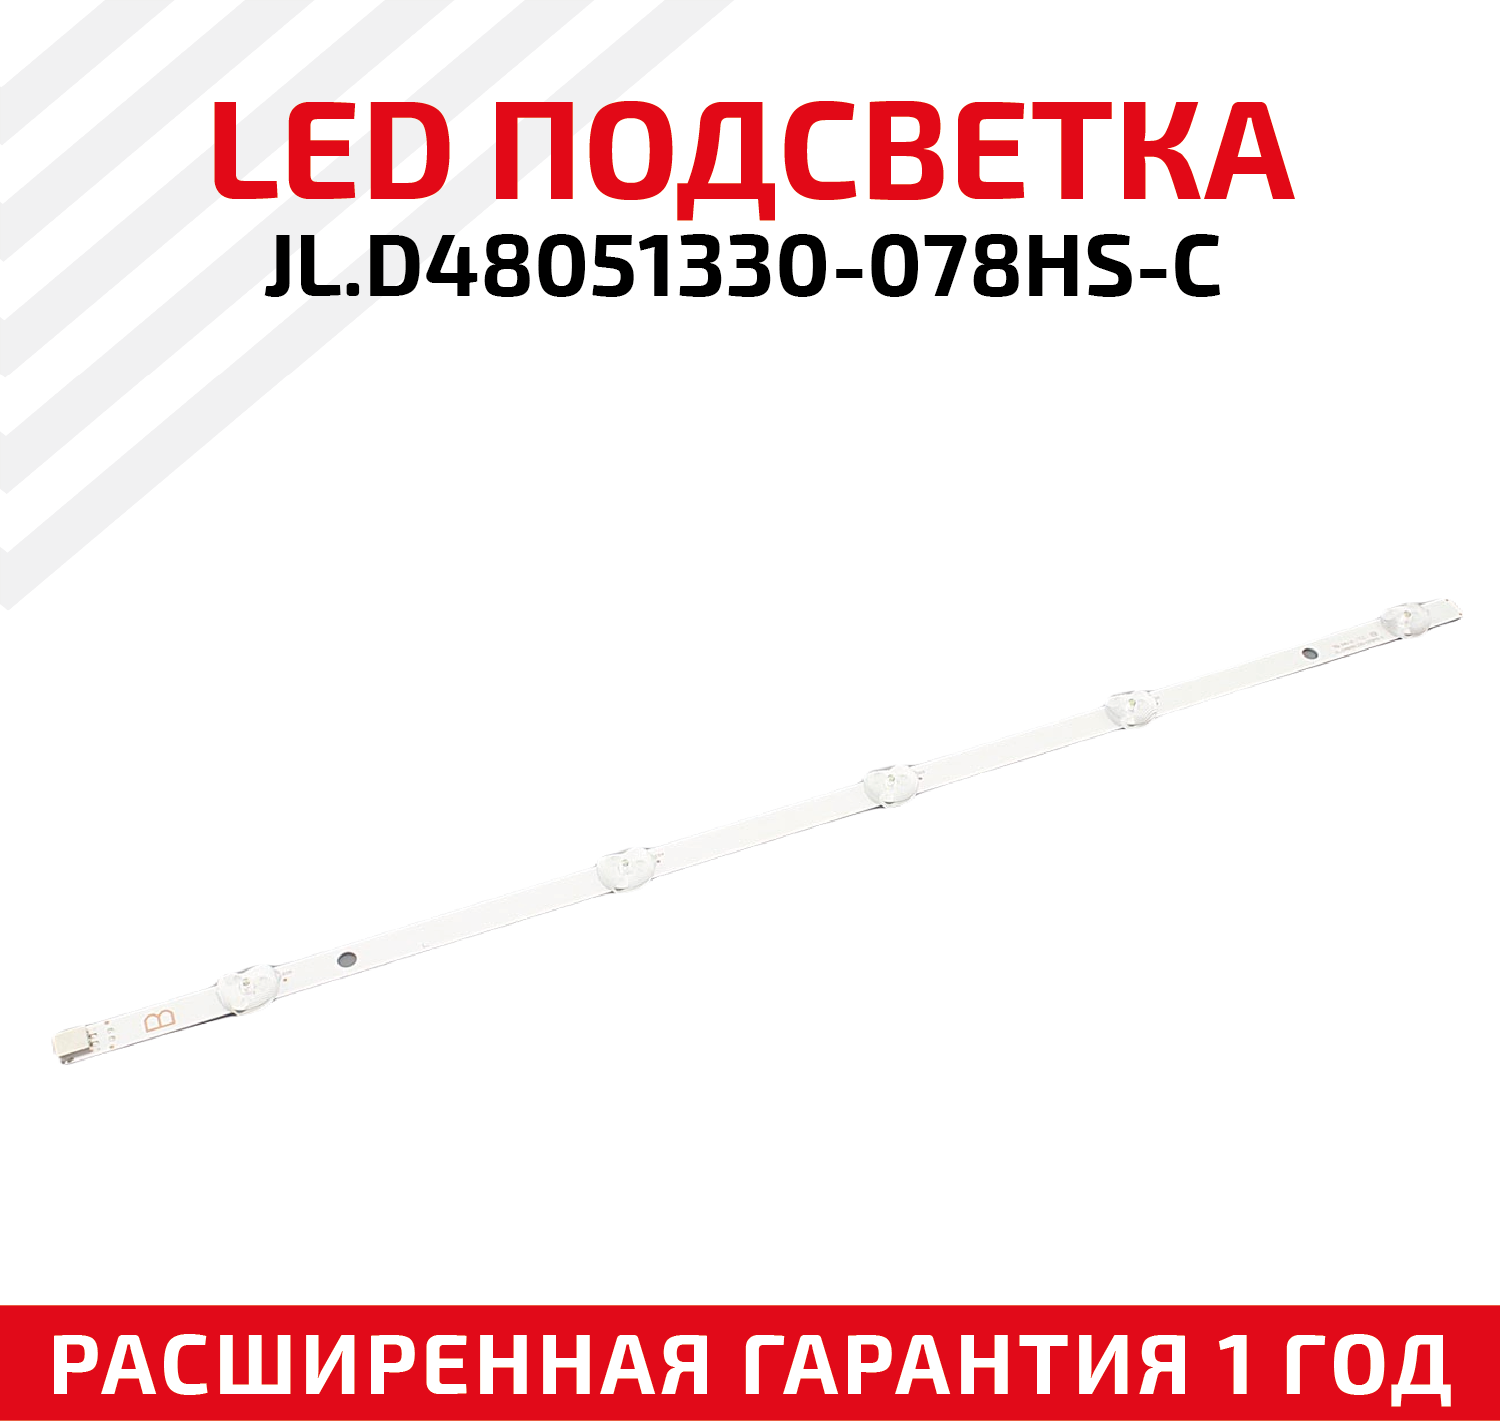 LED подсветка (светодиодная планка) для телевизора JL. D48051330-078HS-C